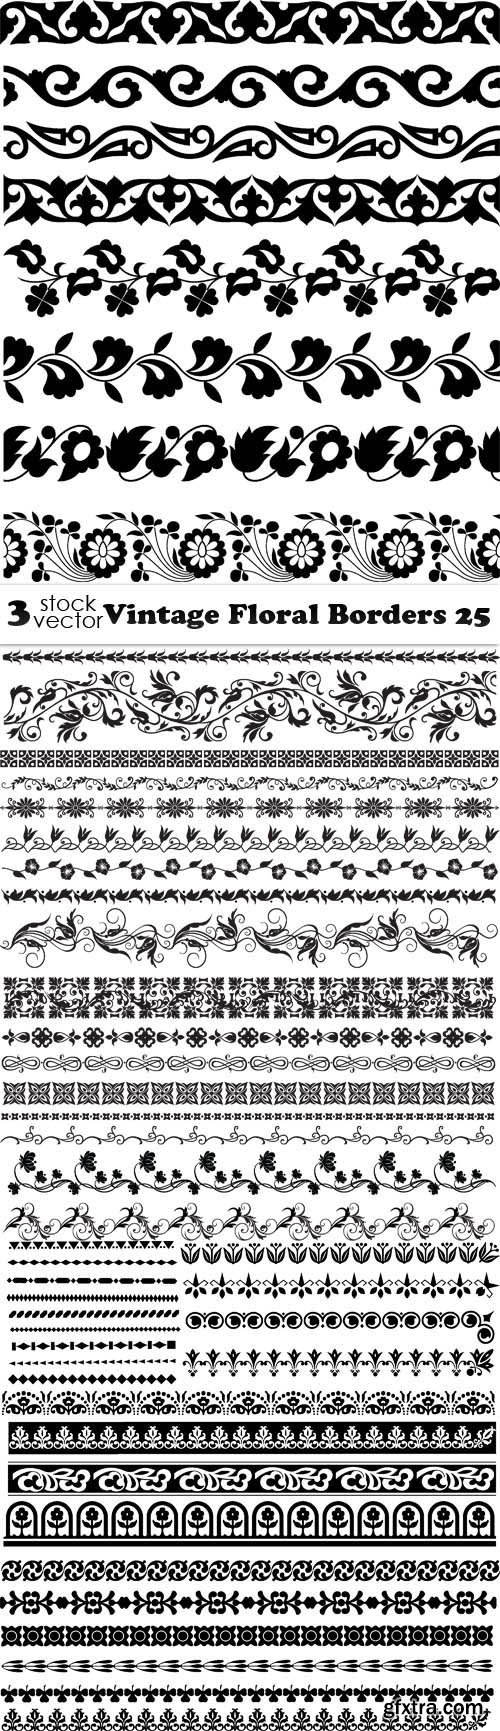 Vectors - Vintage Floral Borders 25